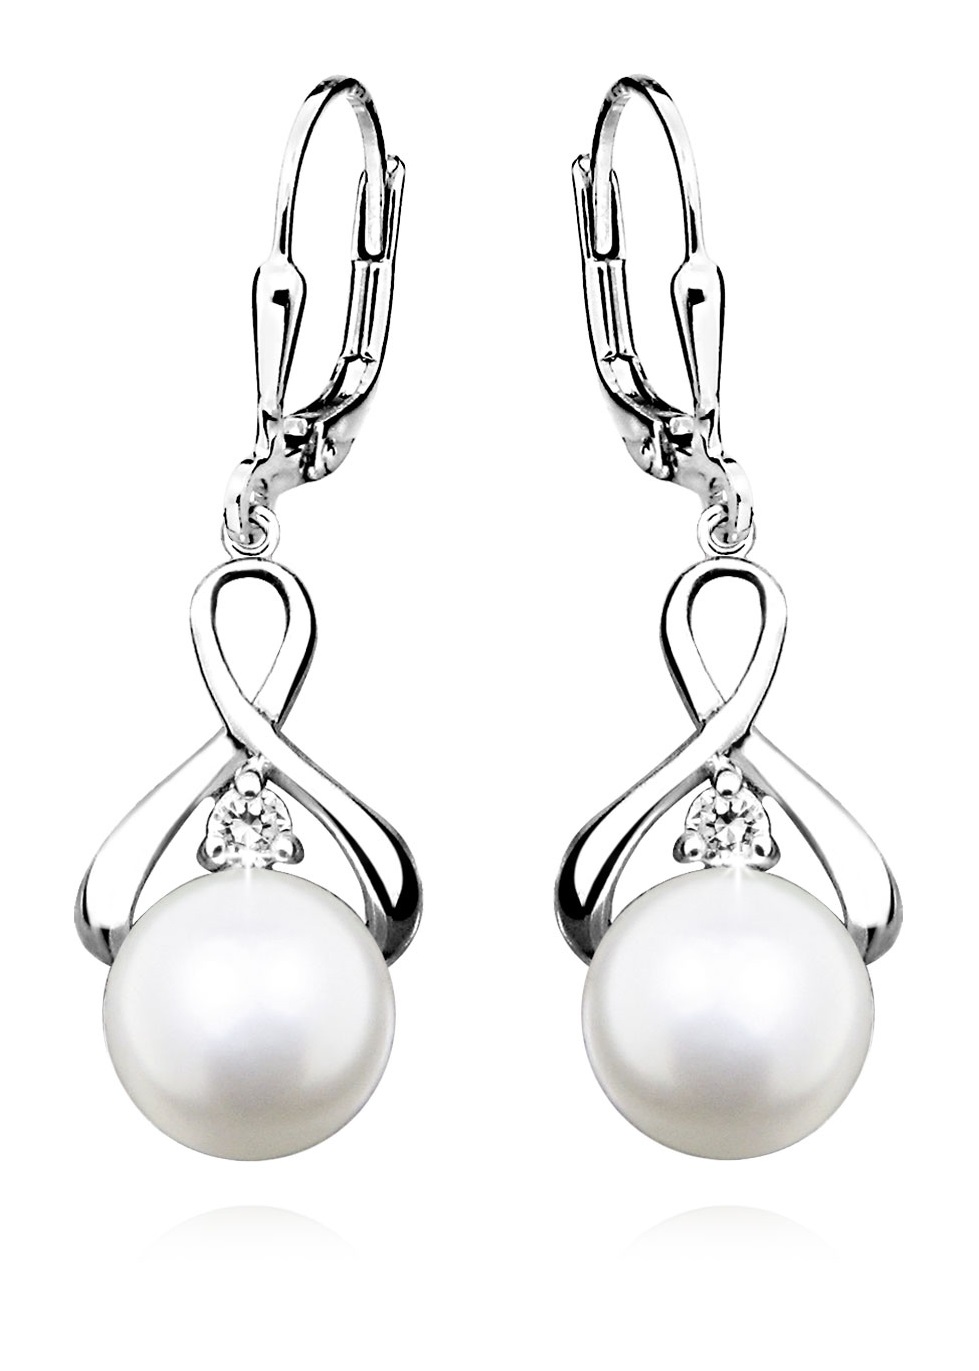 Art Diamond Stříbrné náušnice s perlami a diamanty DAGUC2436P